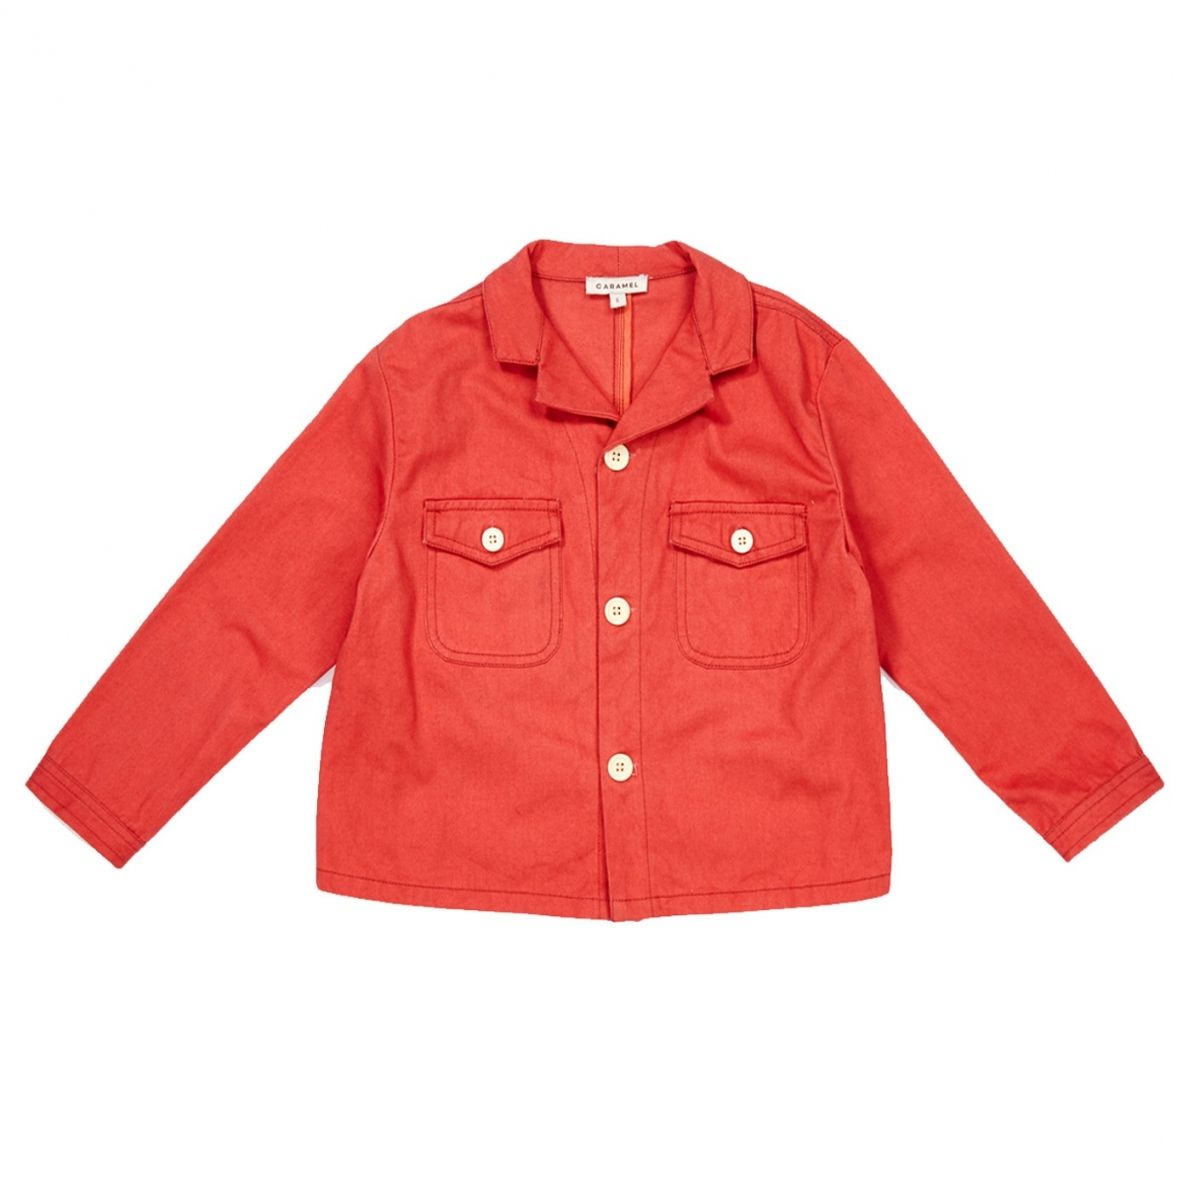 Caramel Baby & Child Jacket Yarrow Rose Peach red S199RP 